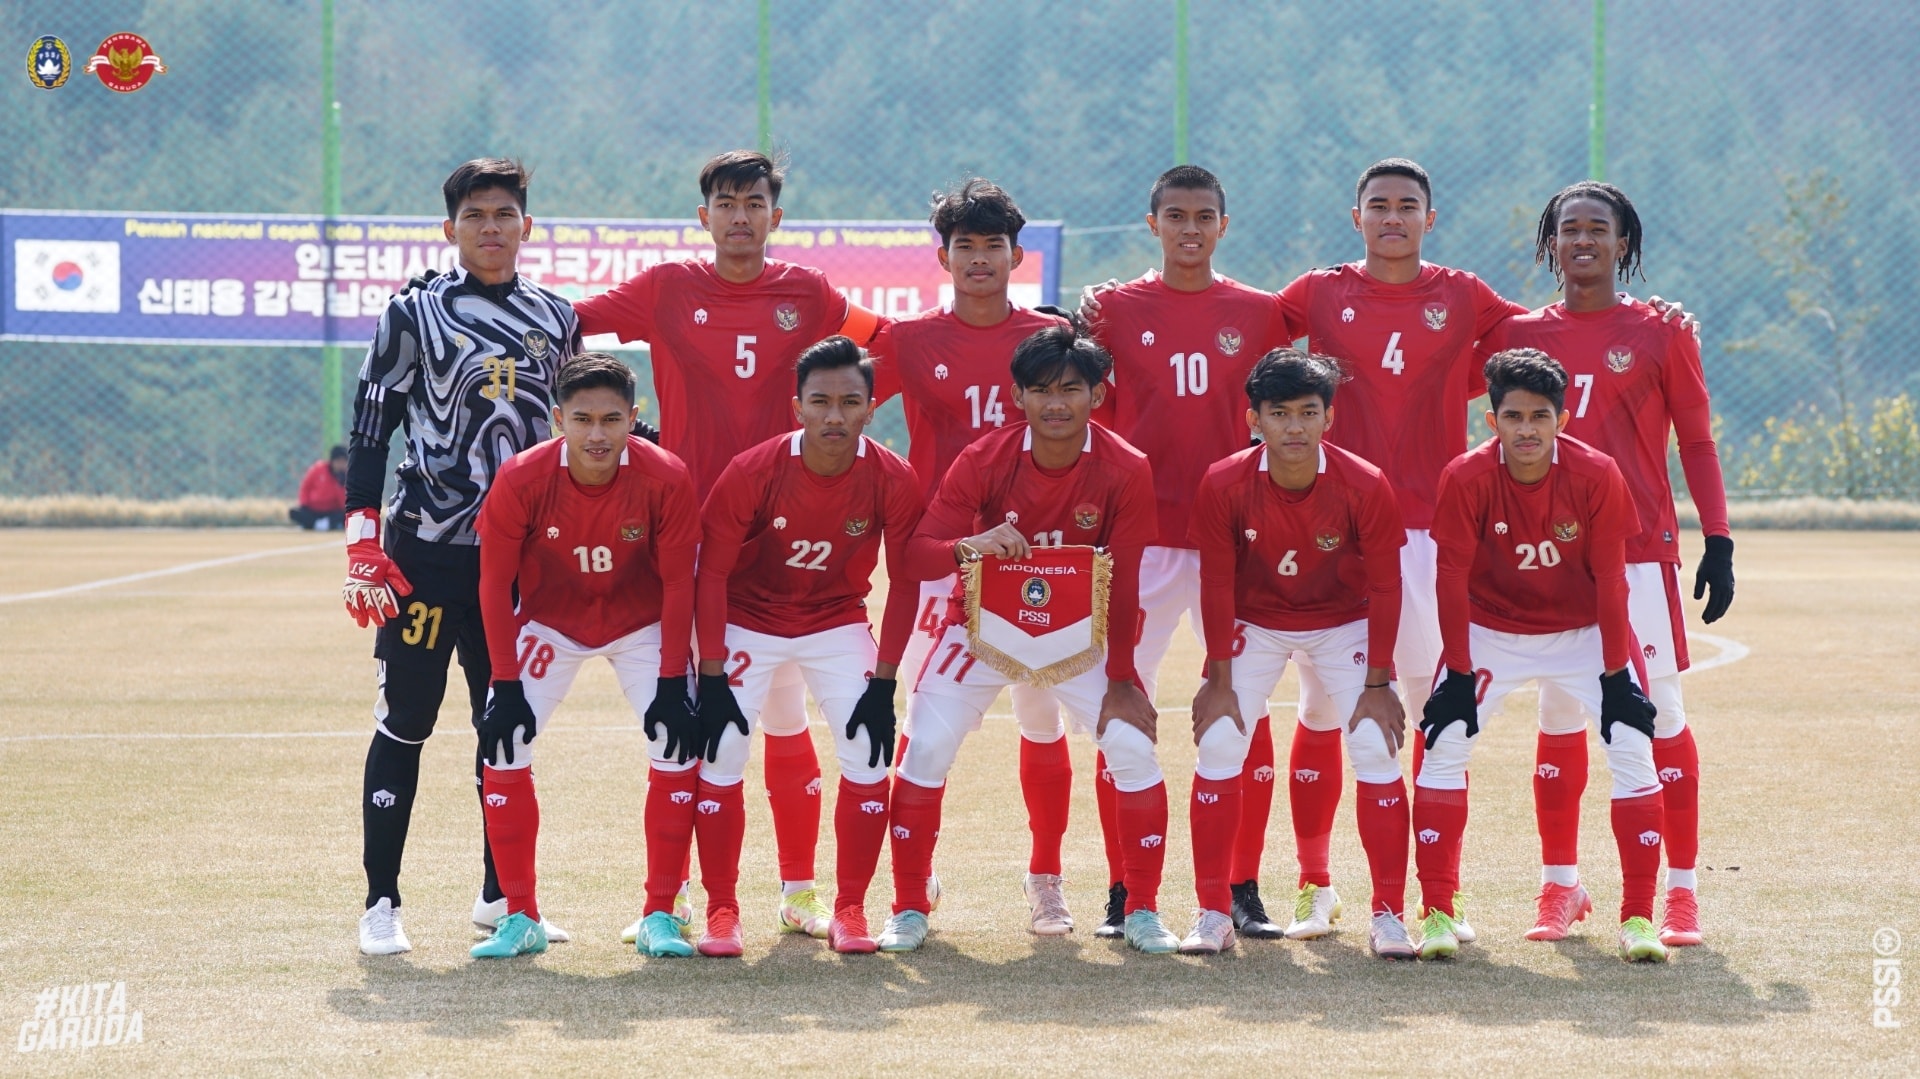 Timnas Indonesia U-19 vs Yeungnam University dalam laga yang digelar di Yeongdeok, Korea Selatan, Selasa (22/3/2022) siang. Setelah melalui 90 menit pertandingan, skuad asuhan Shin Tae-yong takluk 1-5.